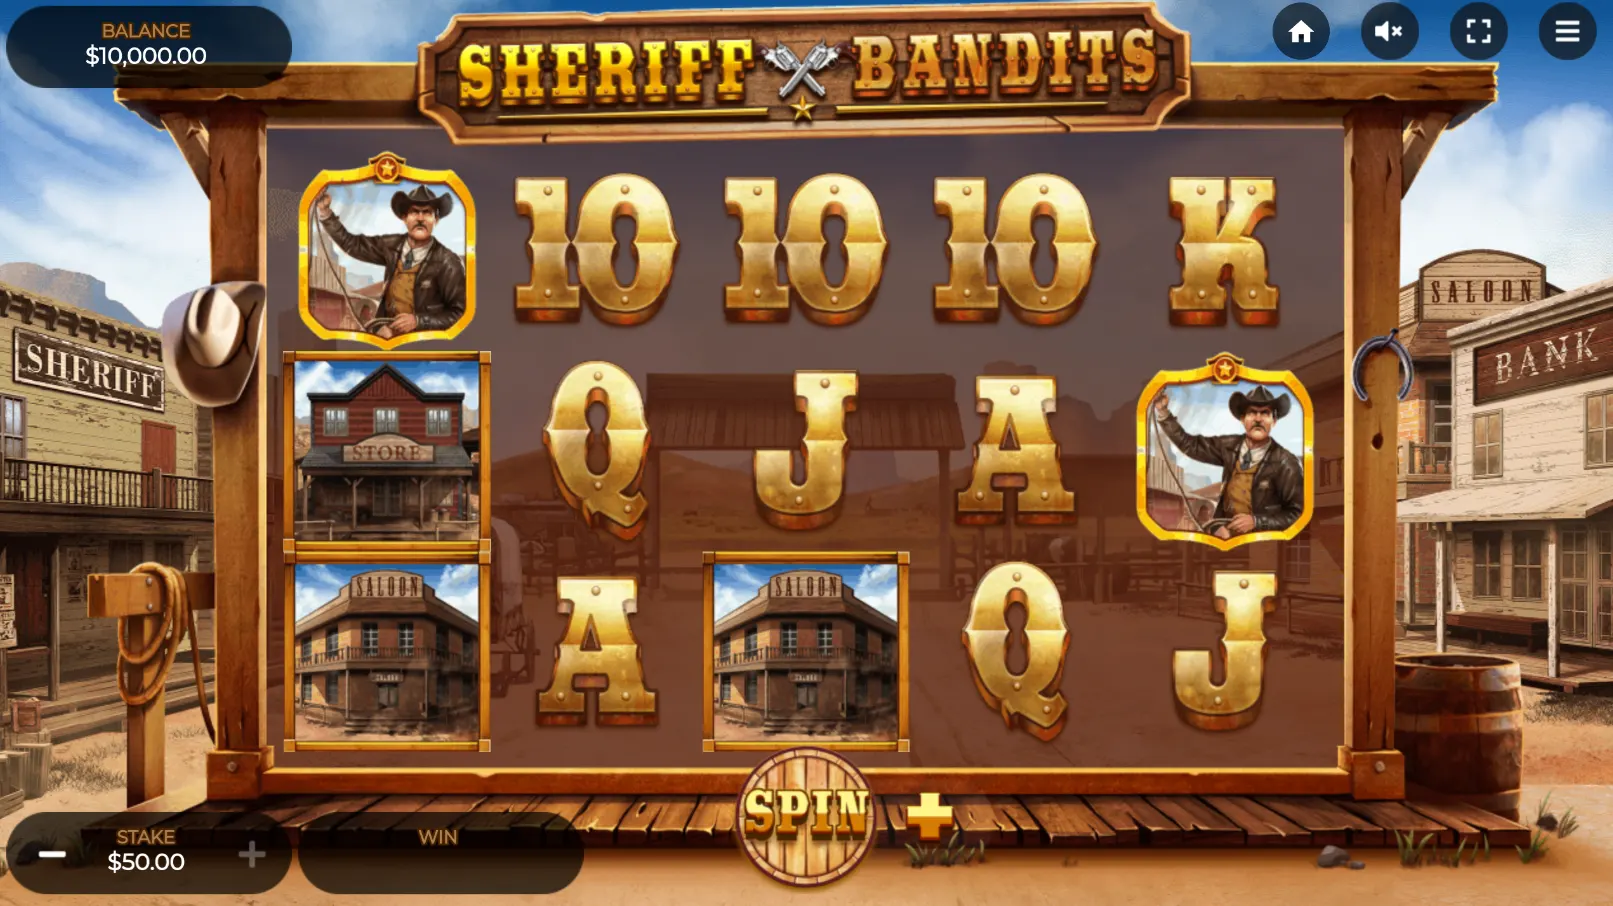 Sheriff vs. Bandits Theme, Graphics, and Sounds